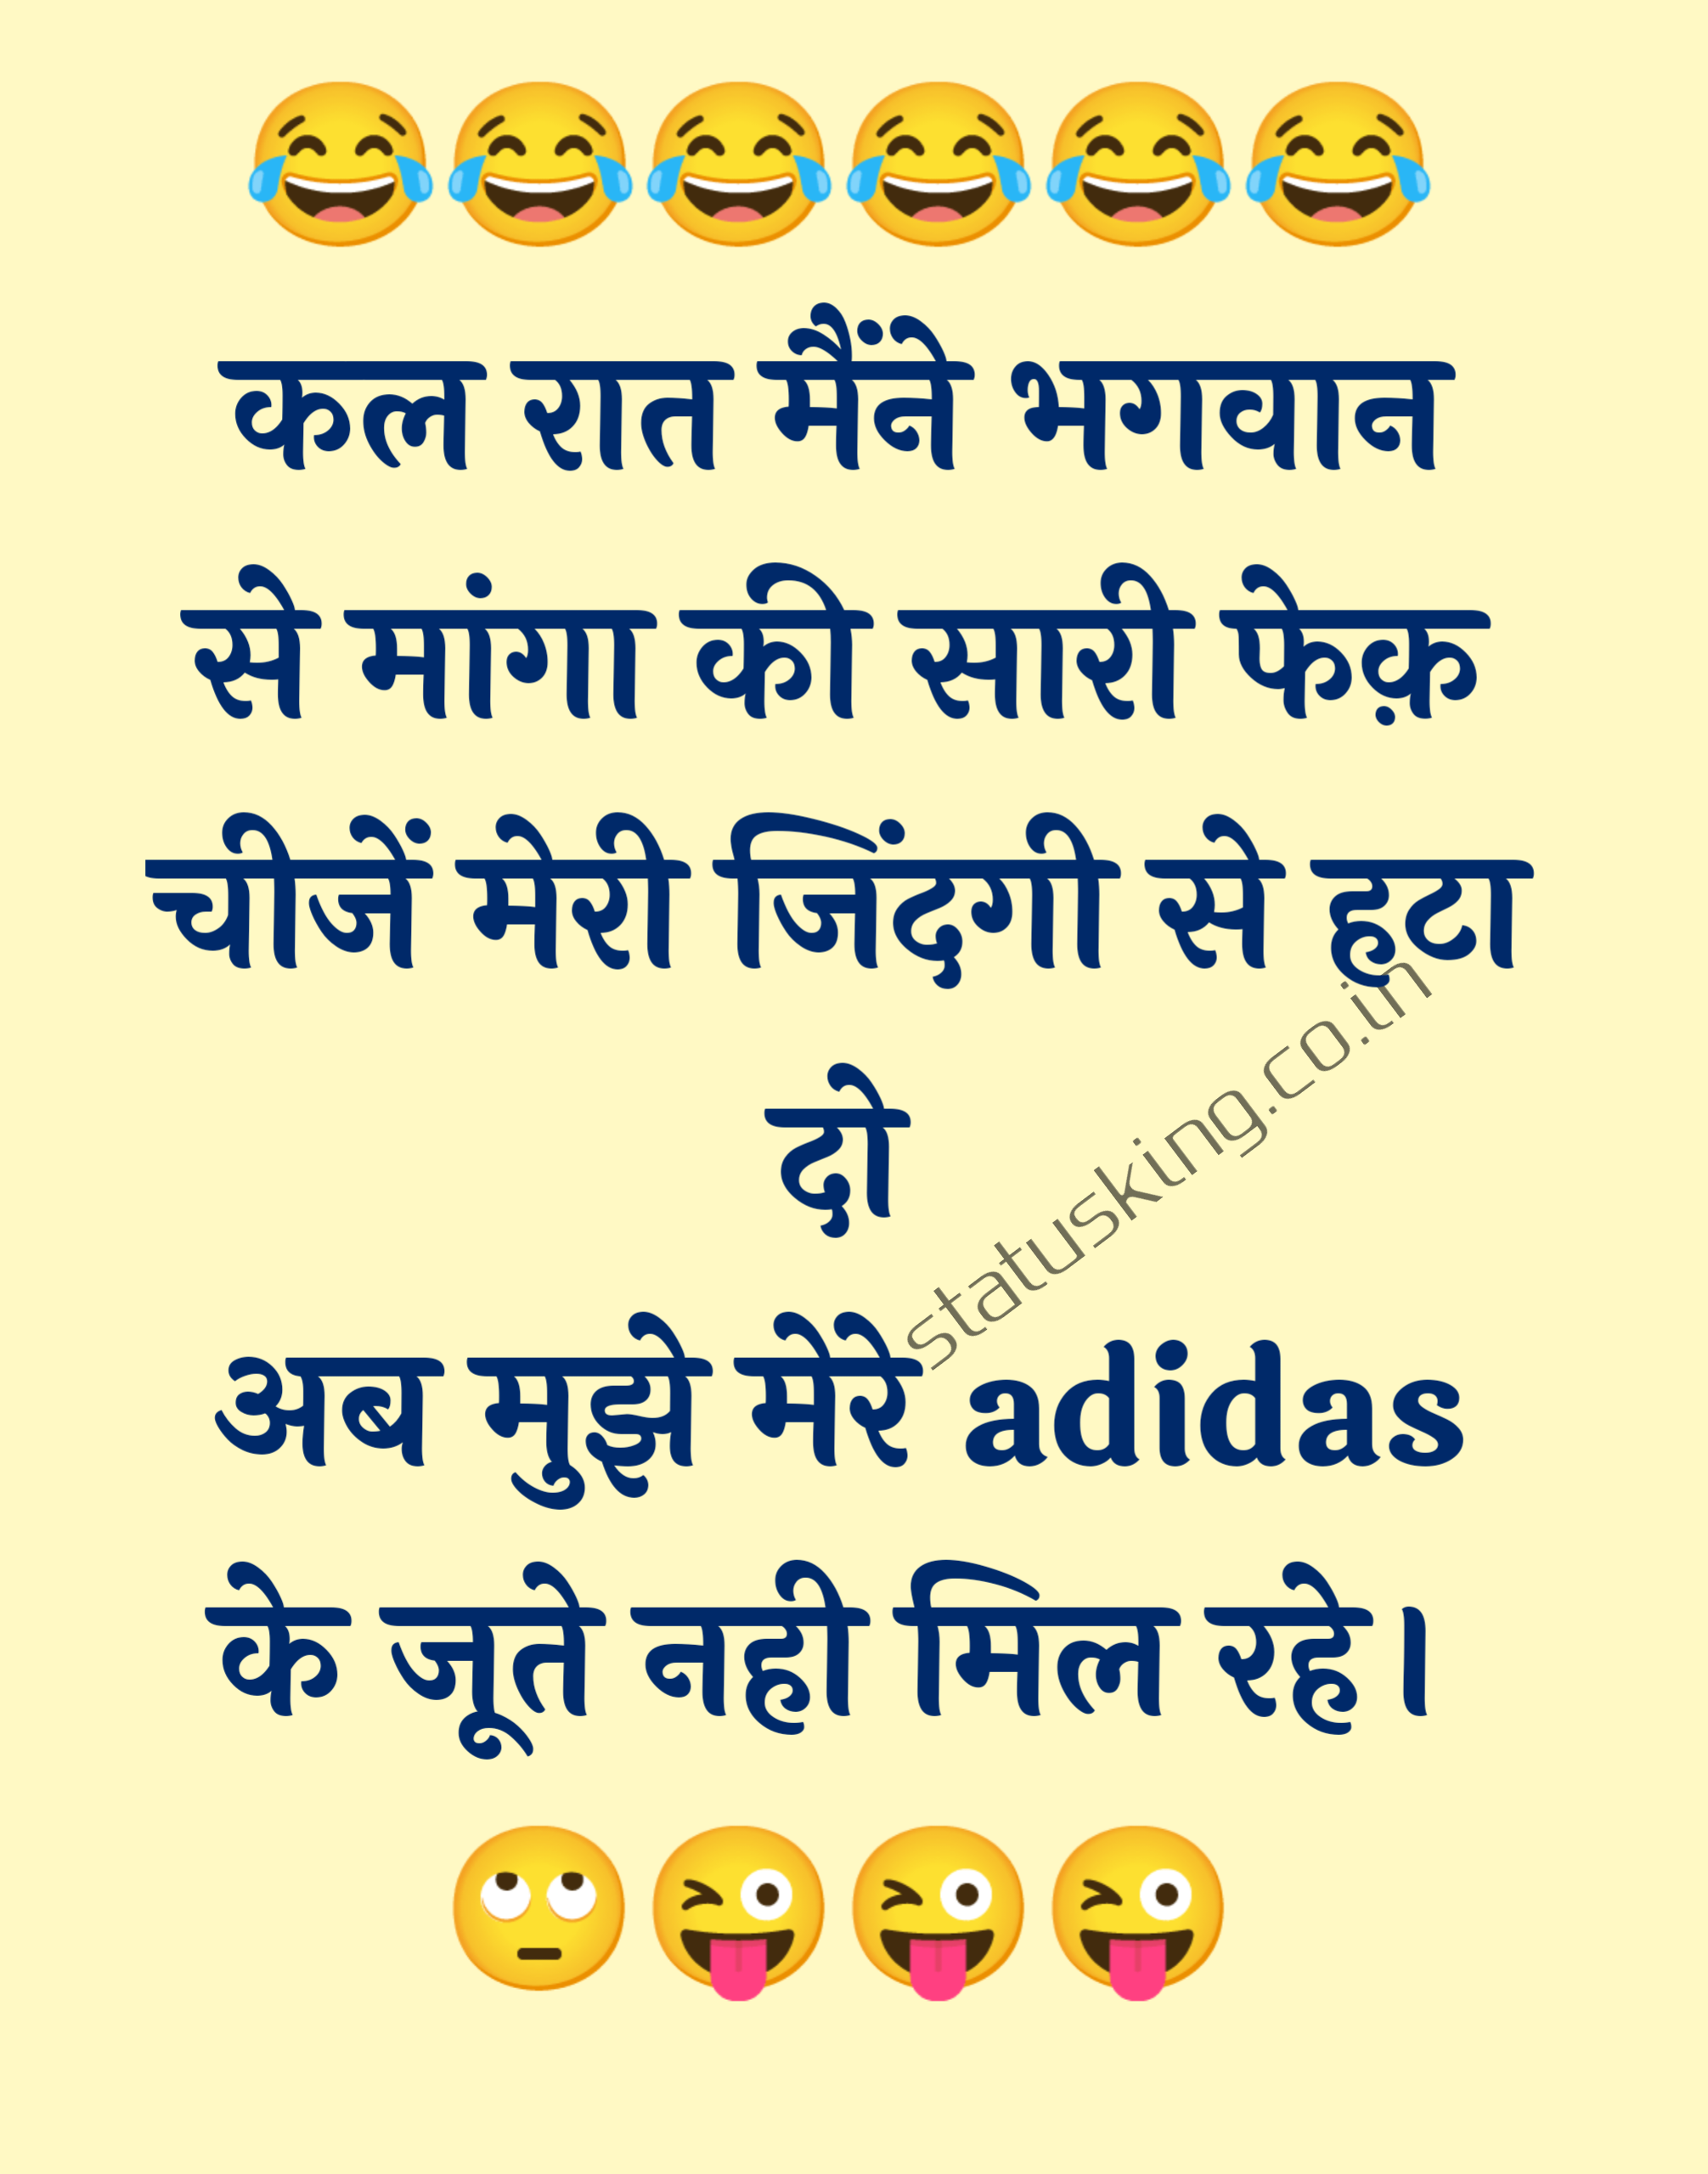  Funny Jokes, Hindi chutkule, hindi jokes